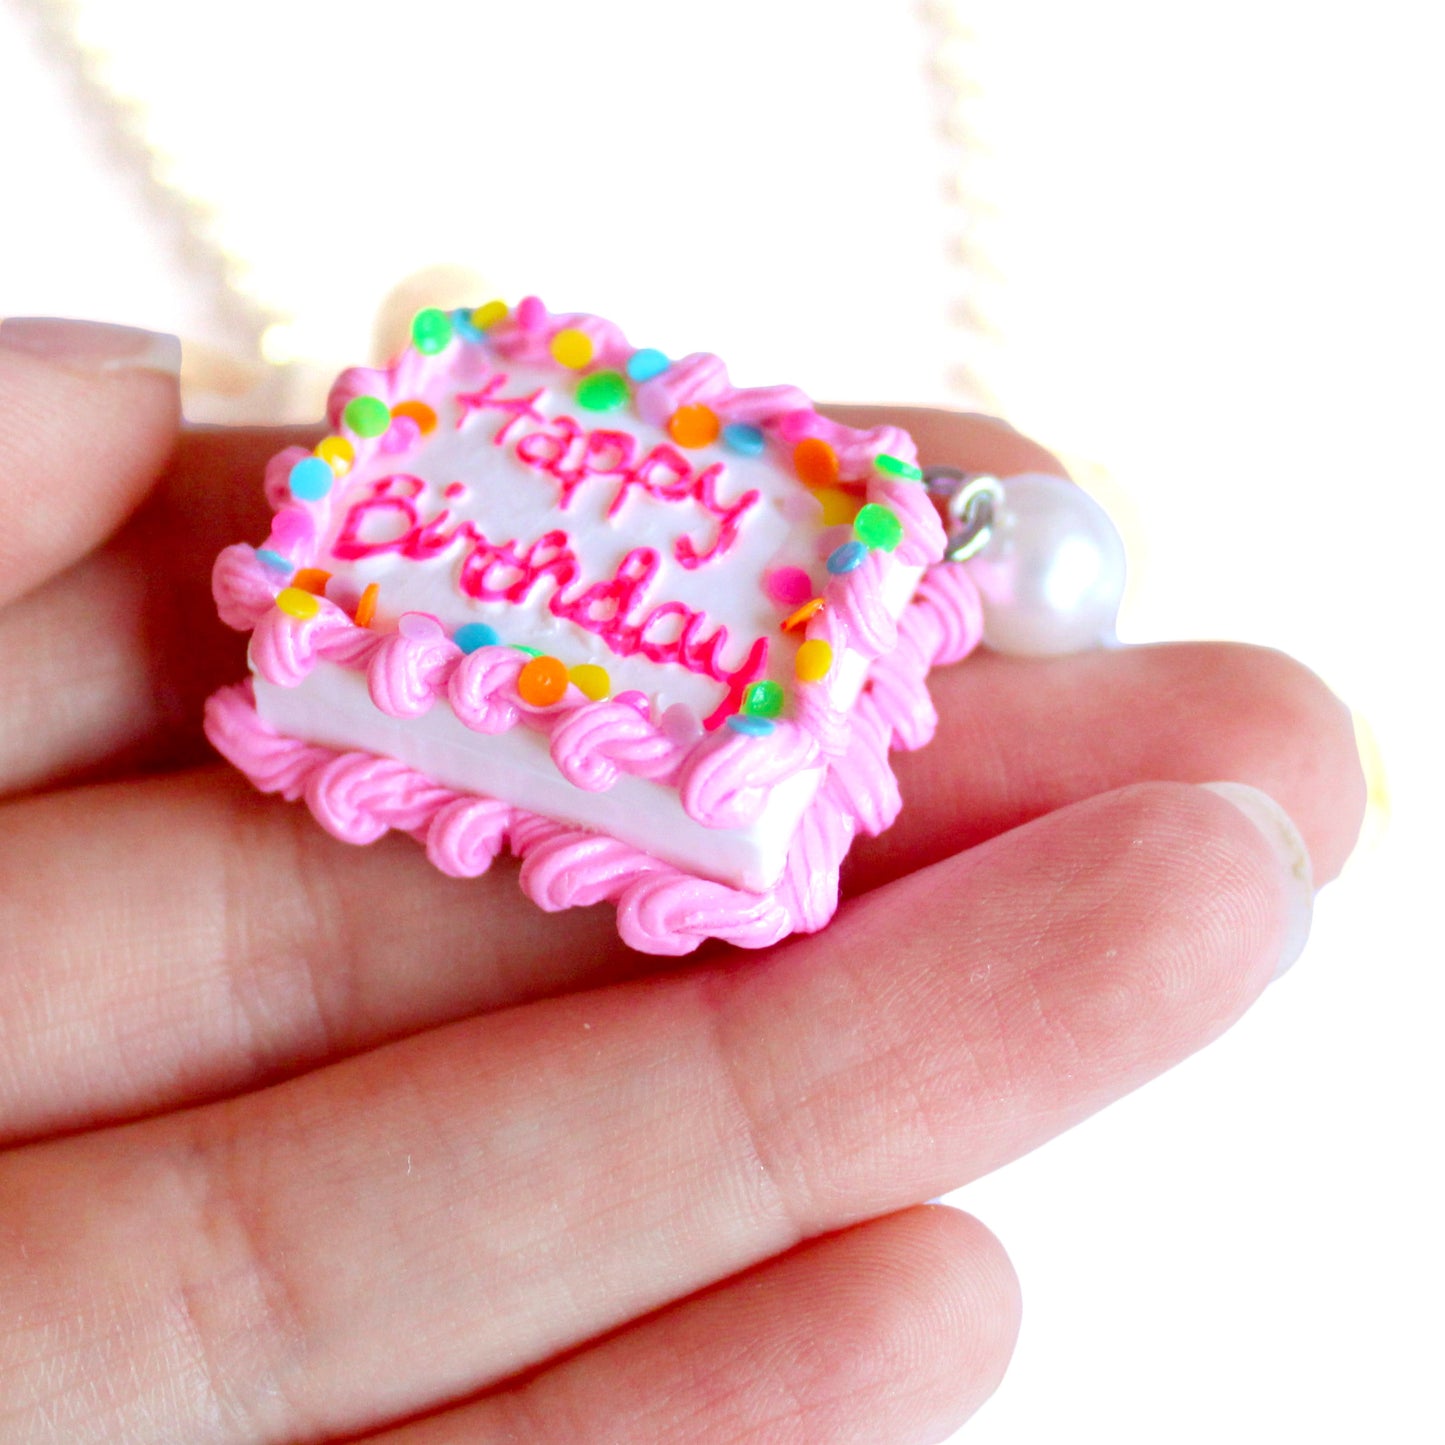 Pink Happy Birthday Cake Necklace